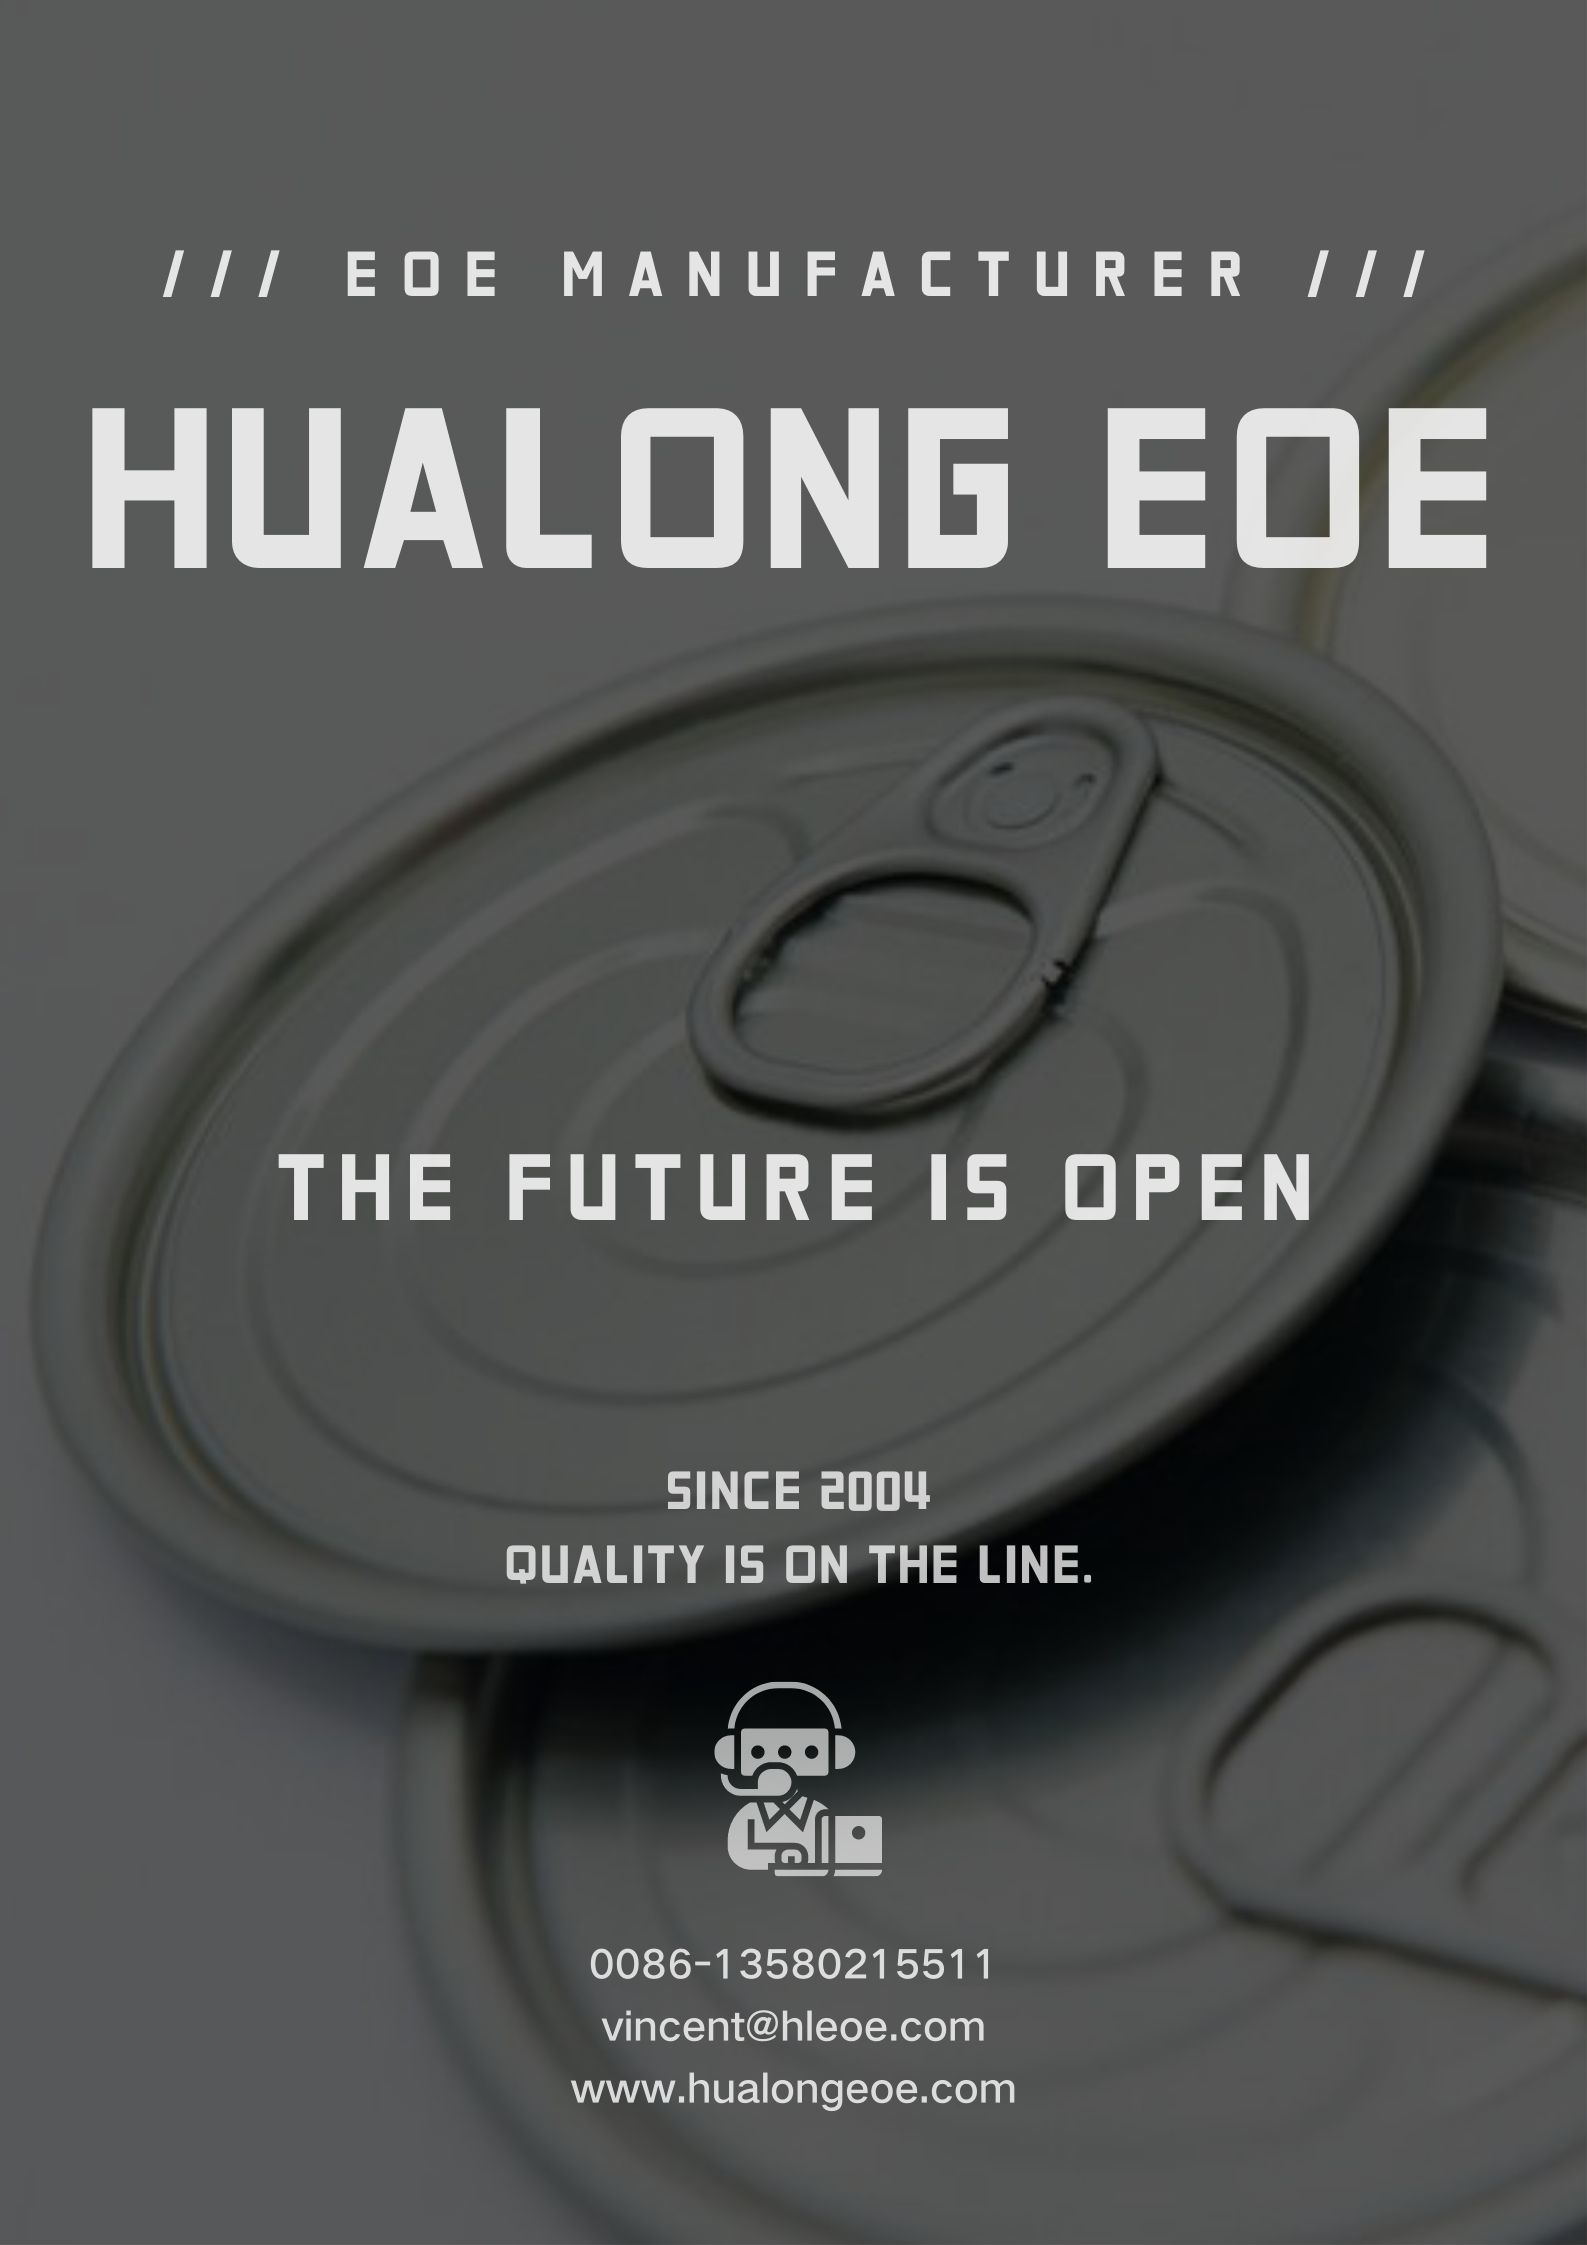 Hualong EOE: ஈஸி ஓபன் எண்டின் தரத்தில் கவனம் செலுத்துகிறது